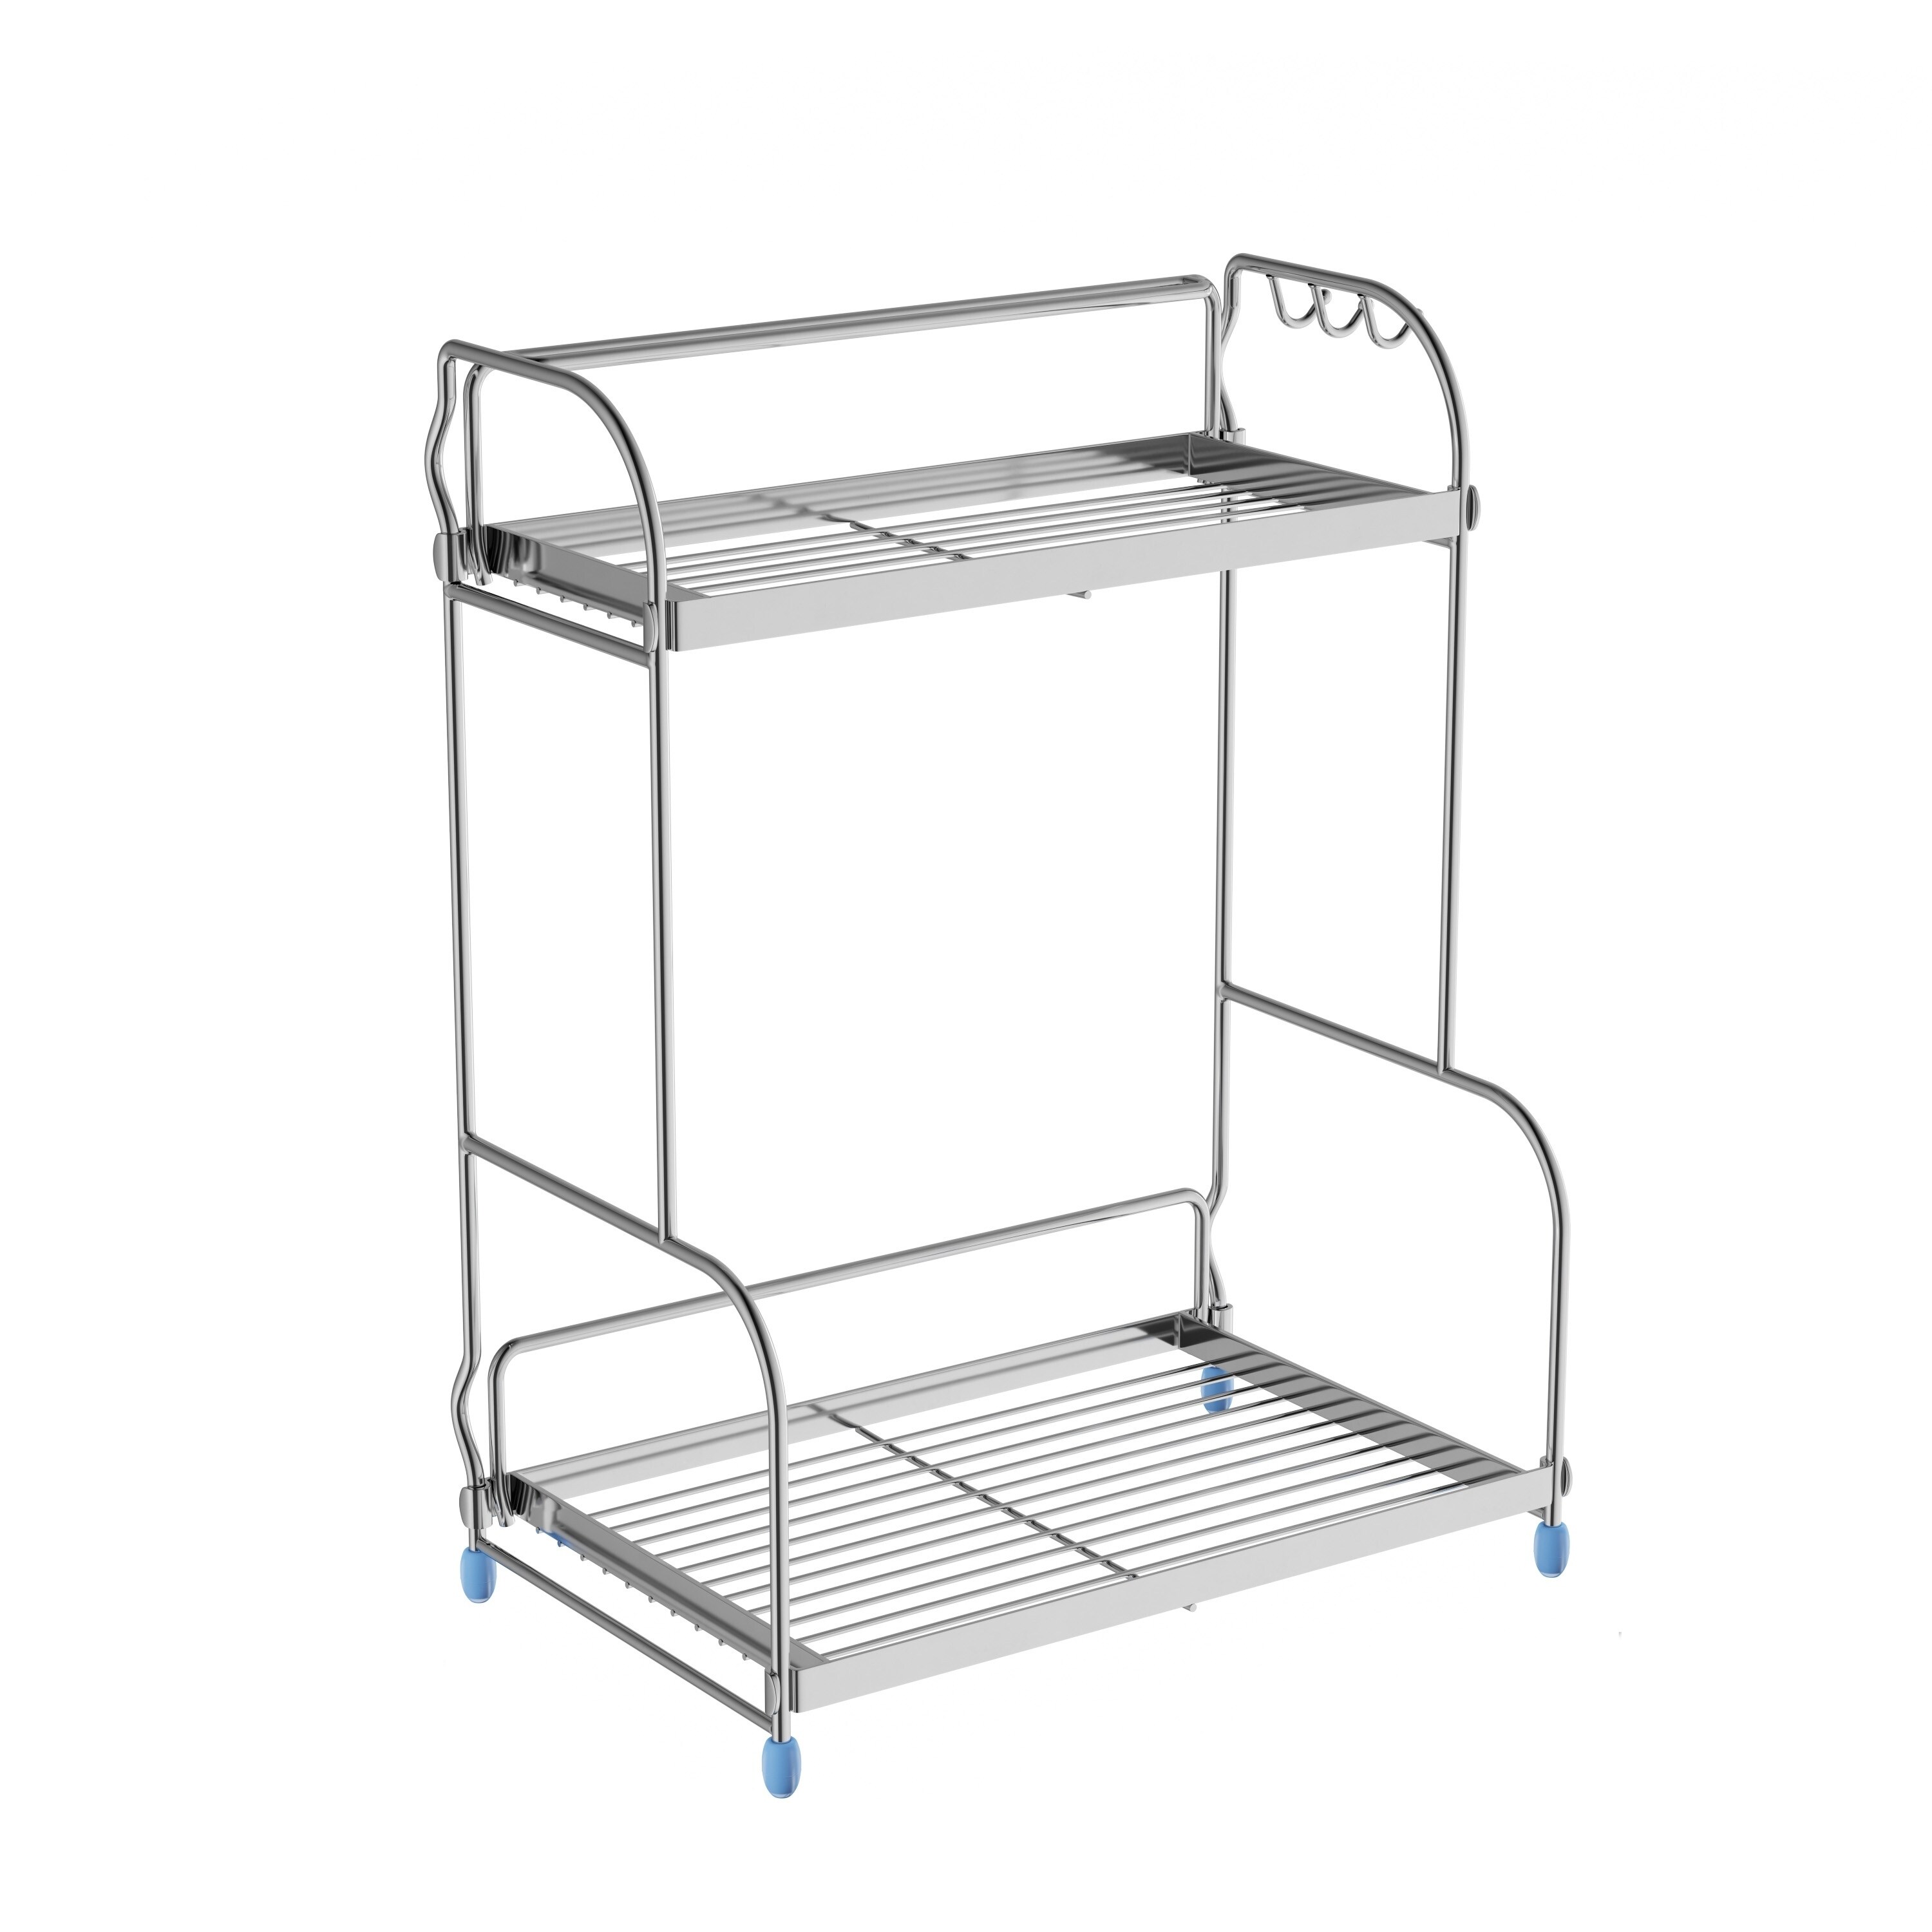 Lavish Home 3 Shelf Can Storage Rack & Reviews